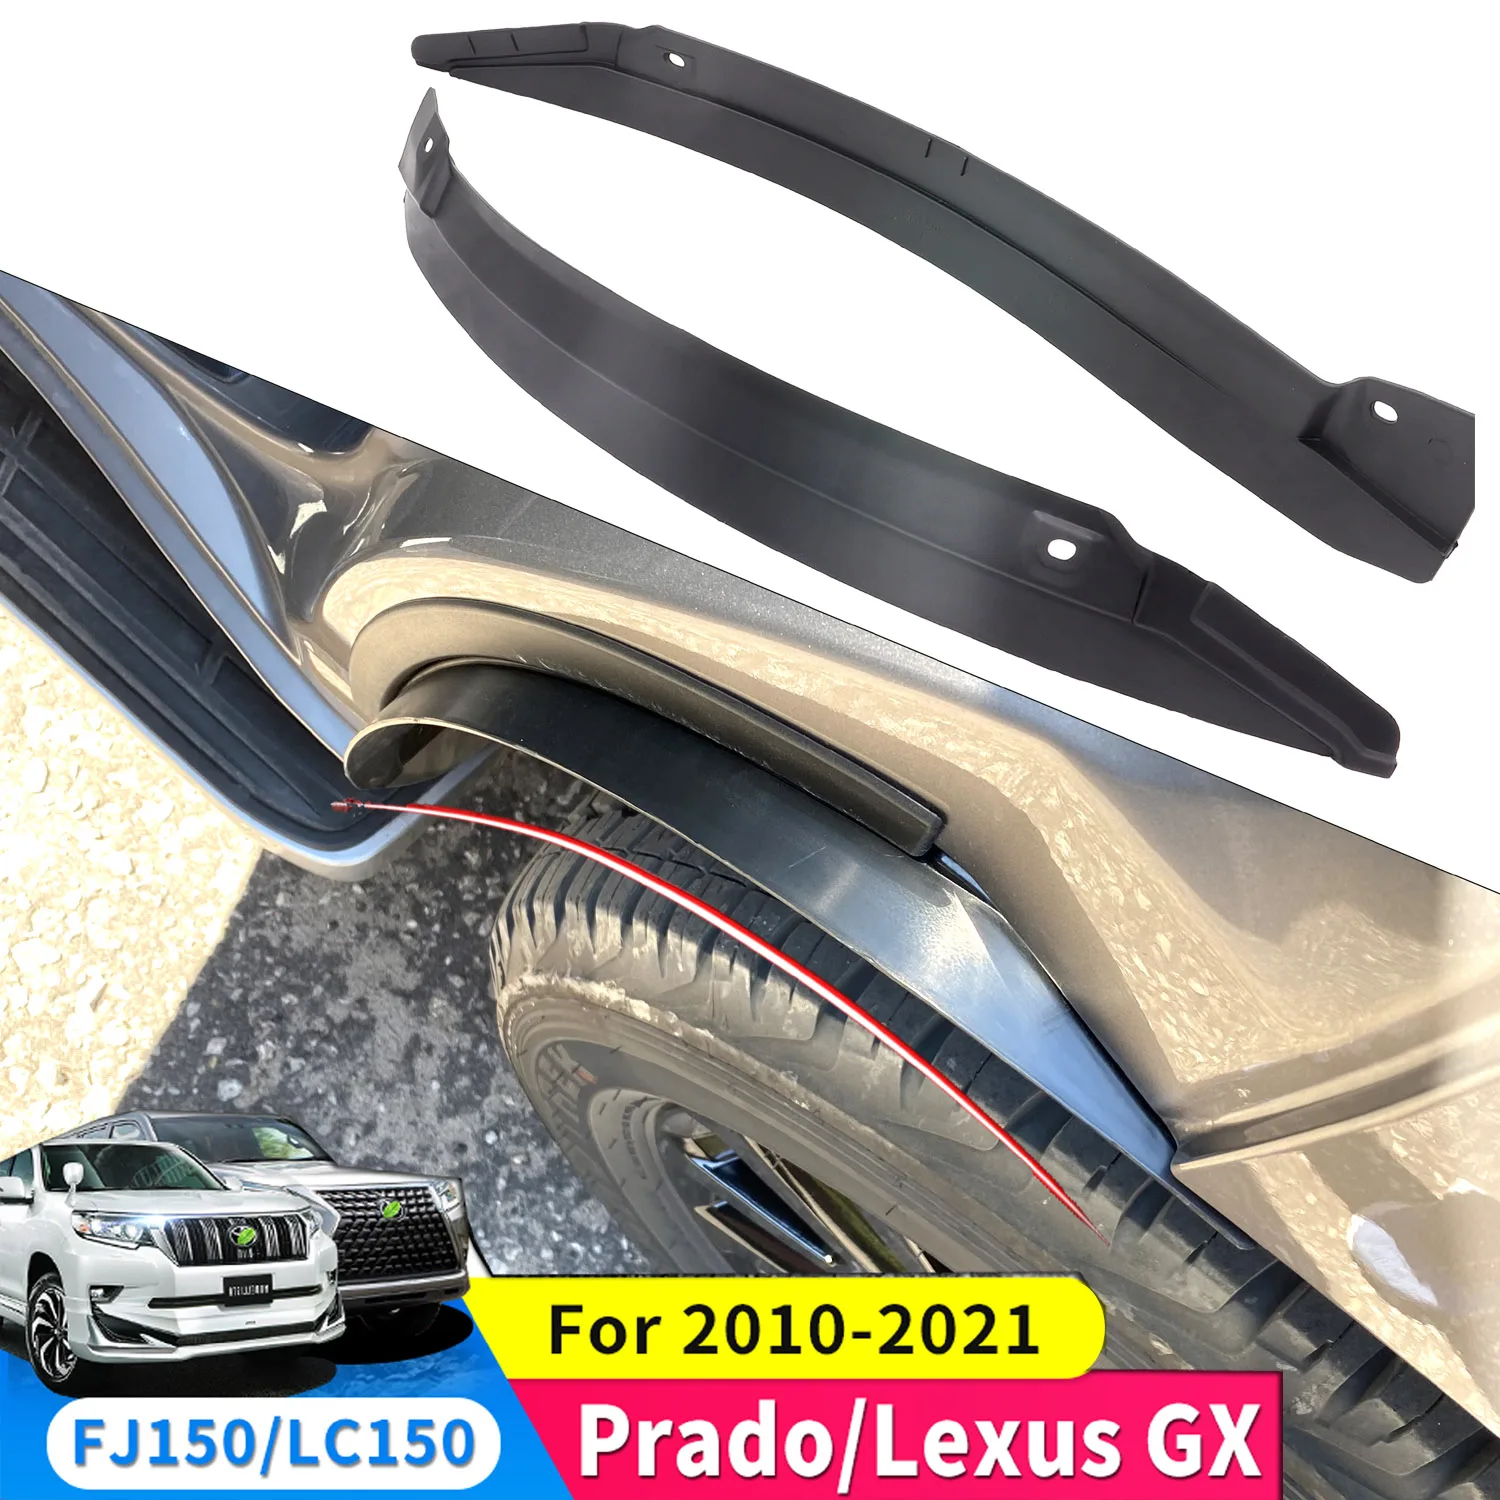 1 Pair Rear Wheel Arch Flare Fender Liner Splash Guards Mud Flap For Toyota Land Cruiser Prado J150 150 Lexus GX460 2010 - 2021